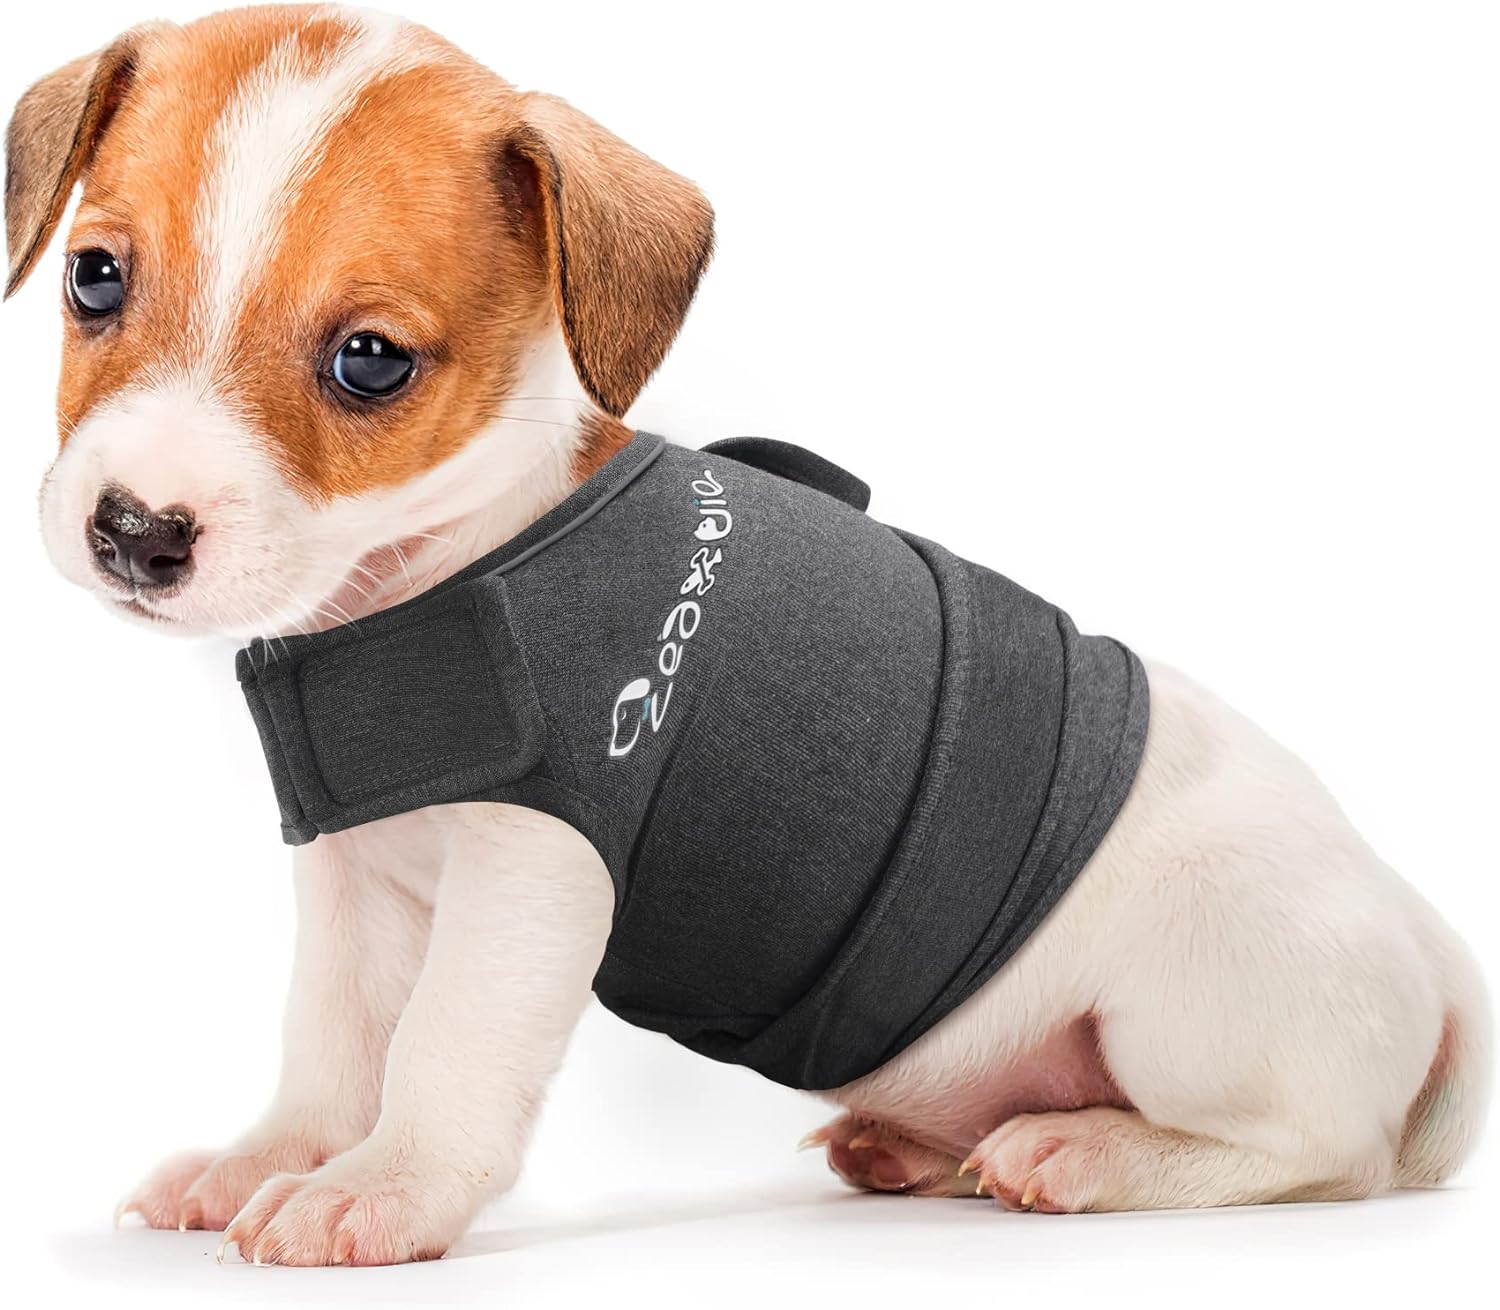 Zeaxuie Baby-Use-Grade Dog Anxiety Vest